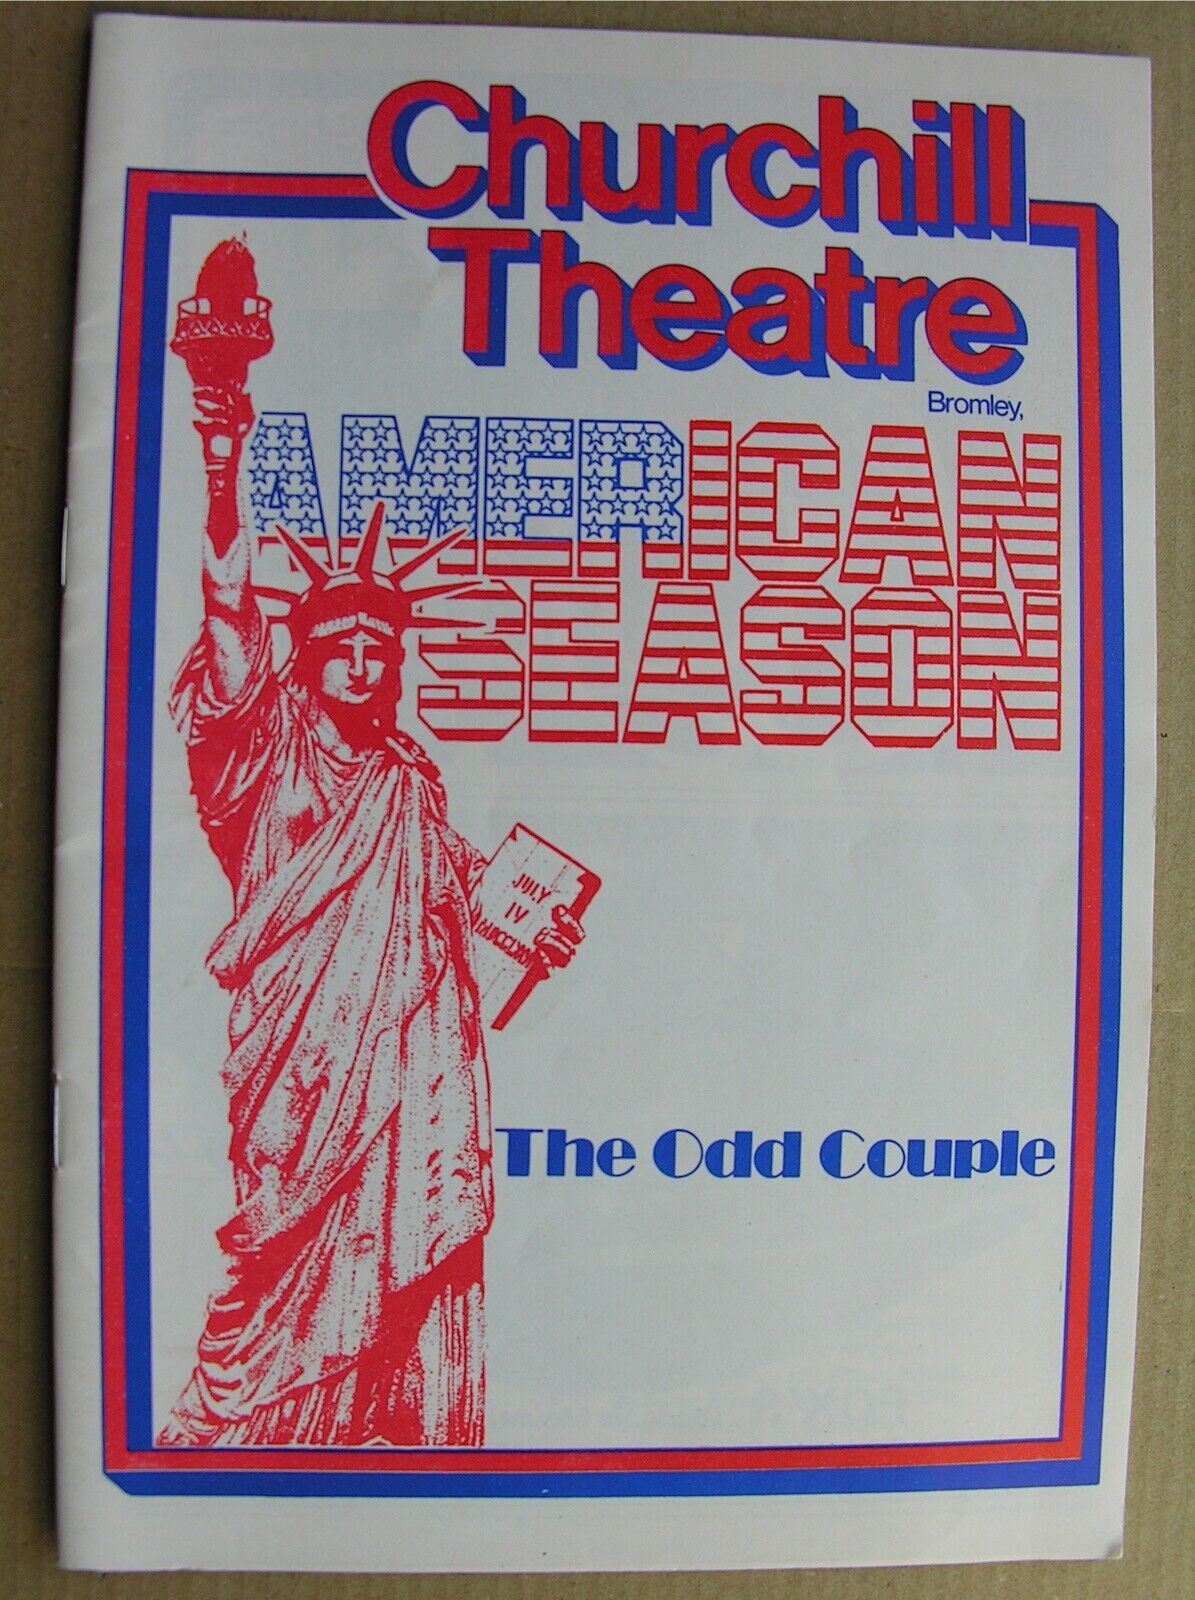 1979 THE ODD COUPLE Neil Simon James Berwick Johnny Wade Churchill Theatre